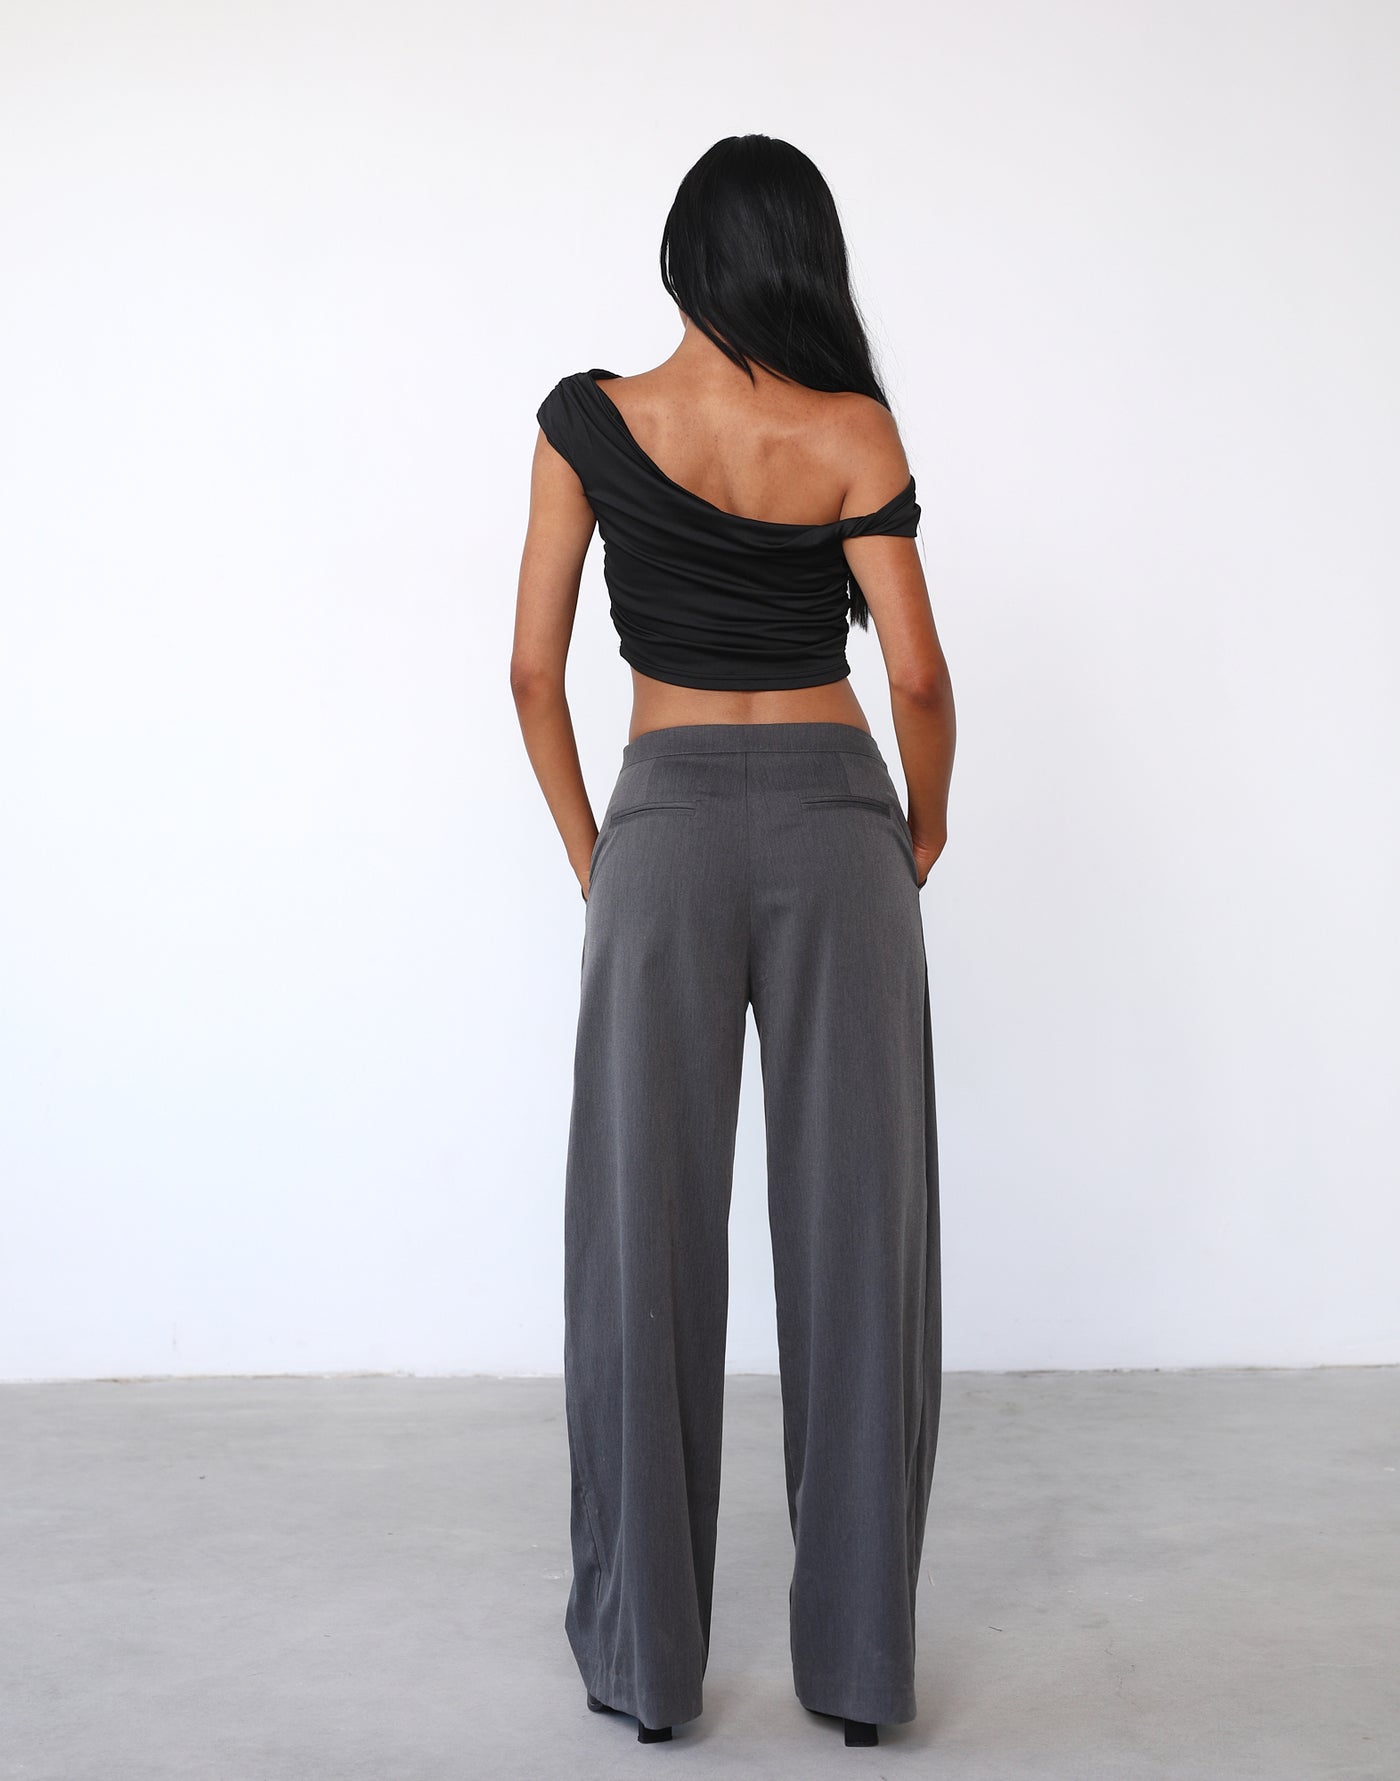 Cartea Pants (Grey) - Wide Leg Pants - Women's Pants - Charcoal Clothing